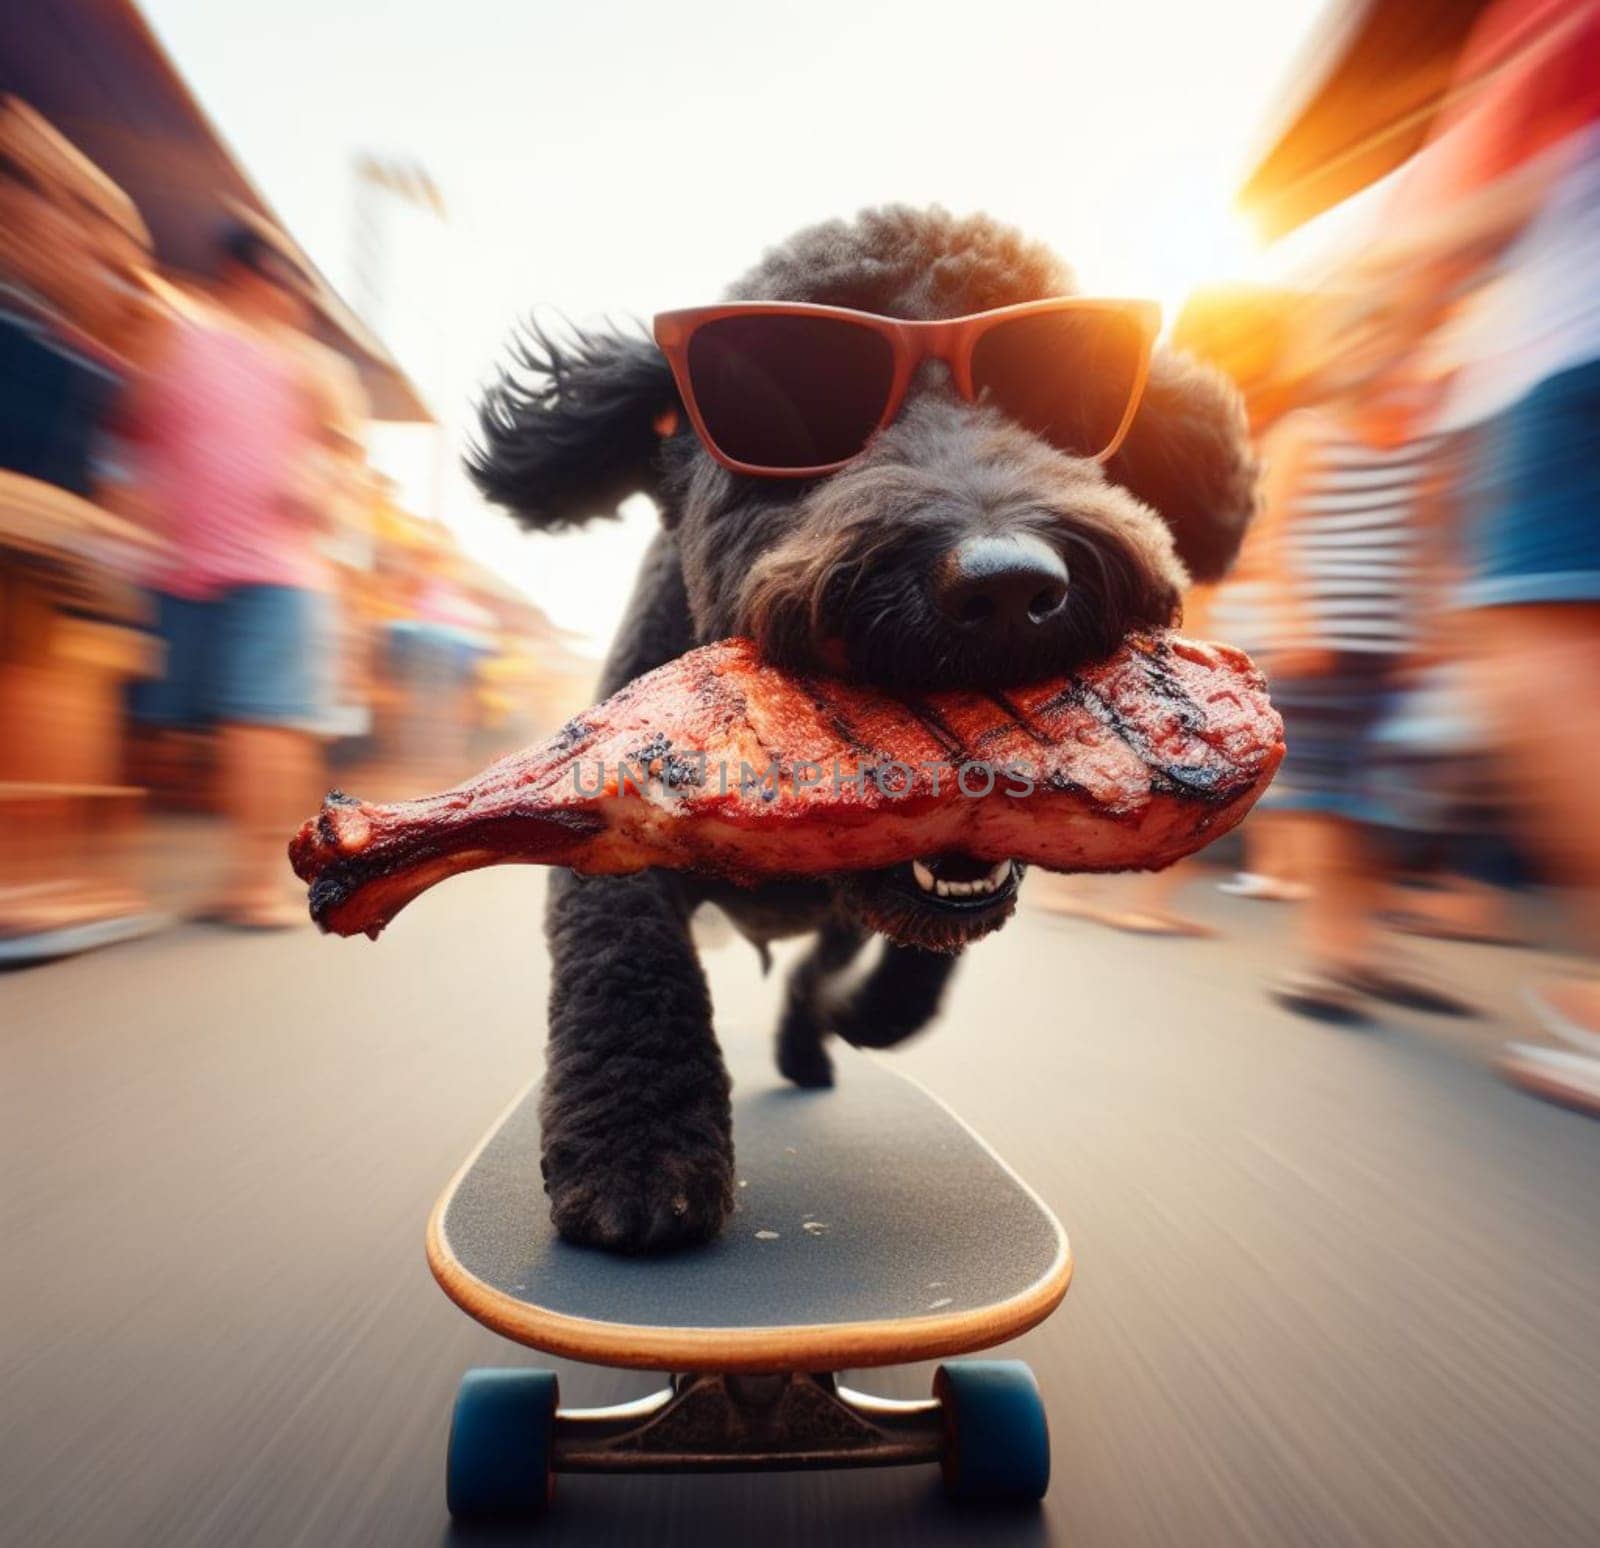 wise black terrier thieve wear cap sunglass escape on skateboard from street market with stolen juicy grilled steak ai art generated